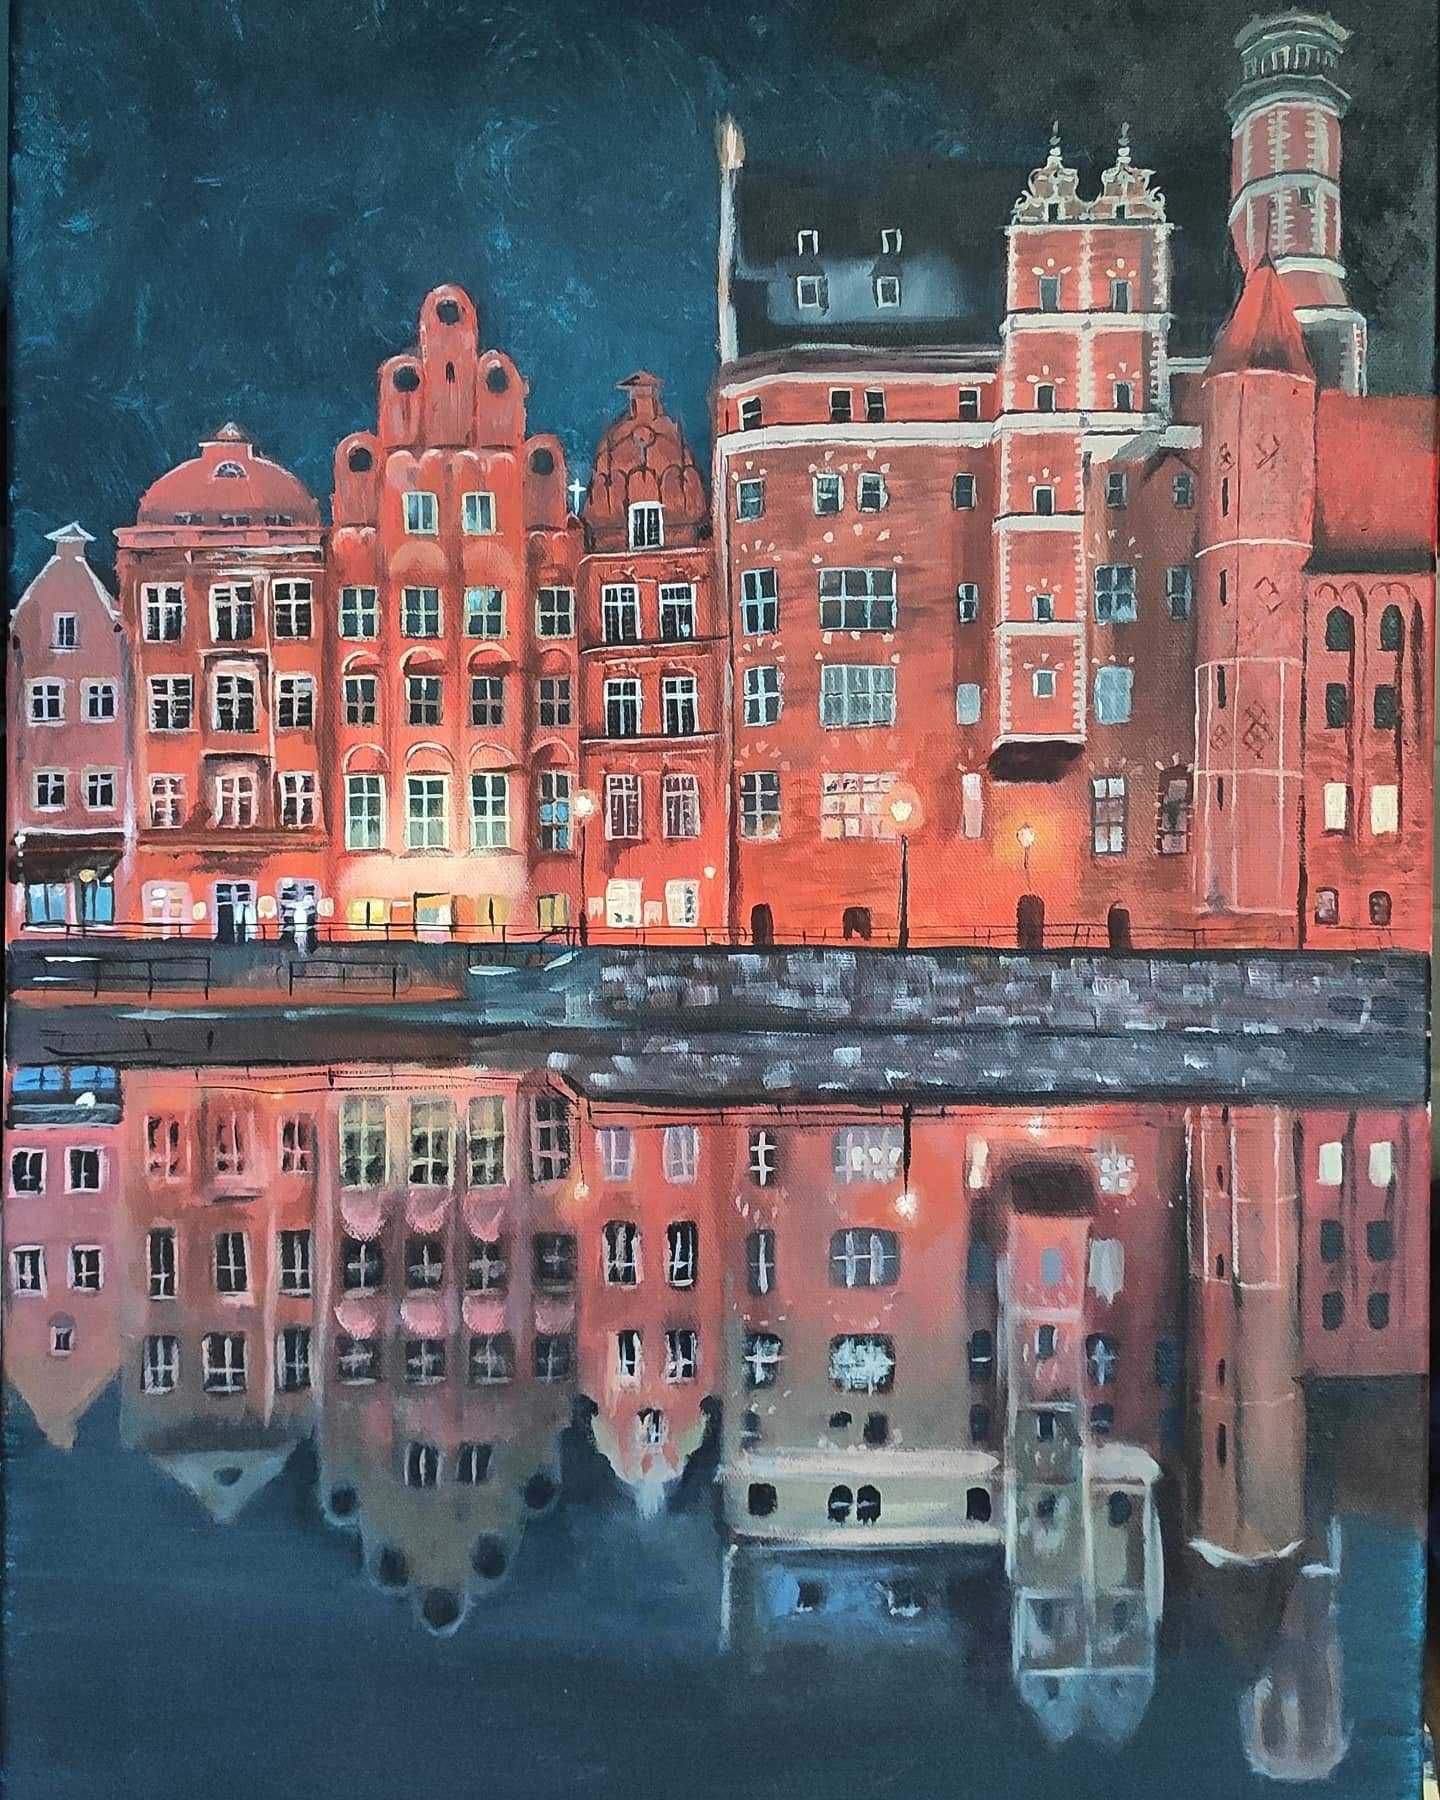 Obraz akrylowy na płótnie 50x70 cm "Gdańsk nocą"